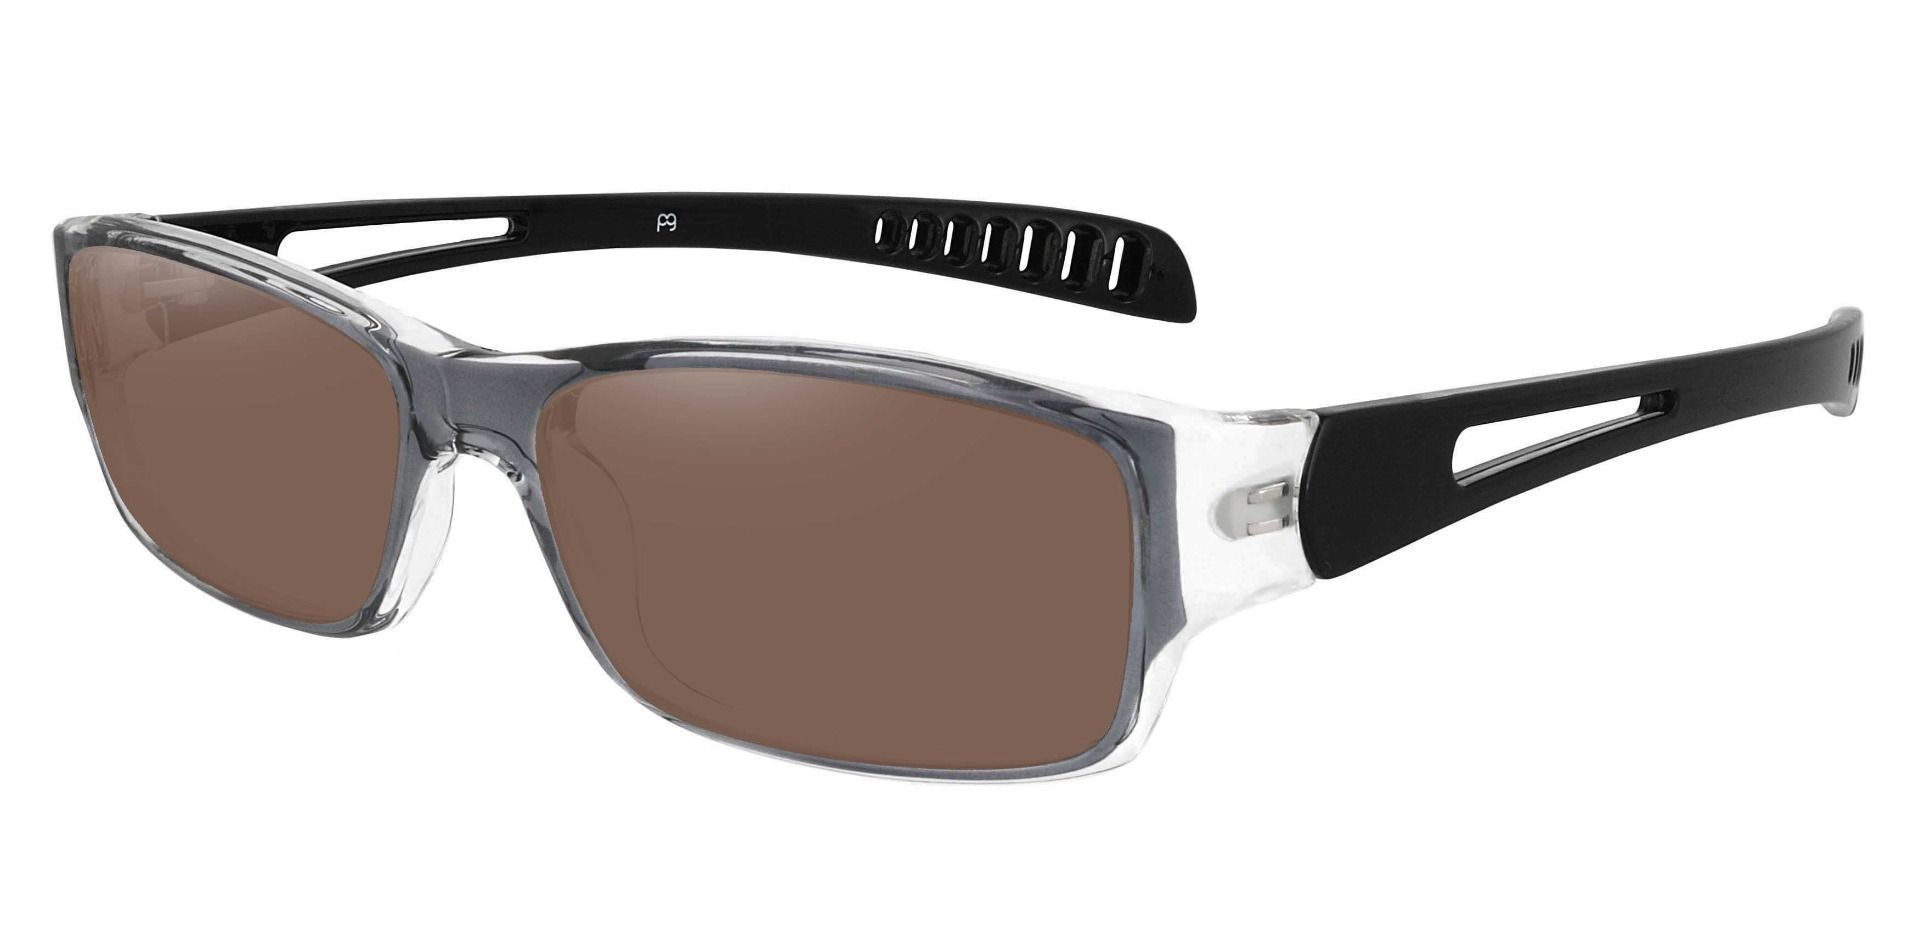 Mercury Rectangle Prescription Sunglasses - Gray Frame With Brown Lenses